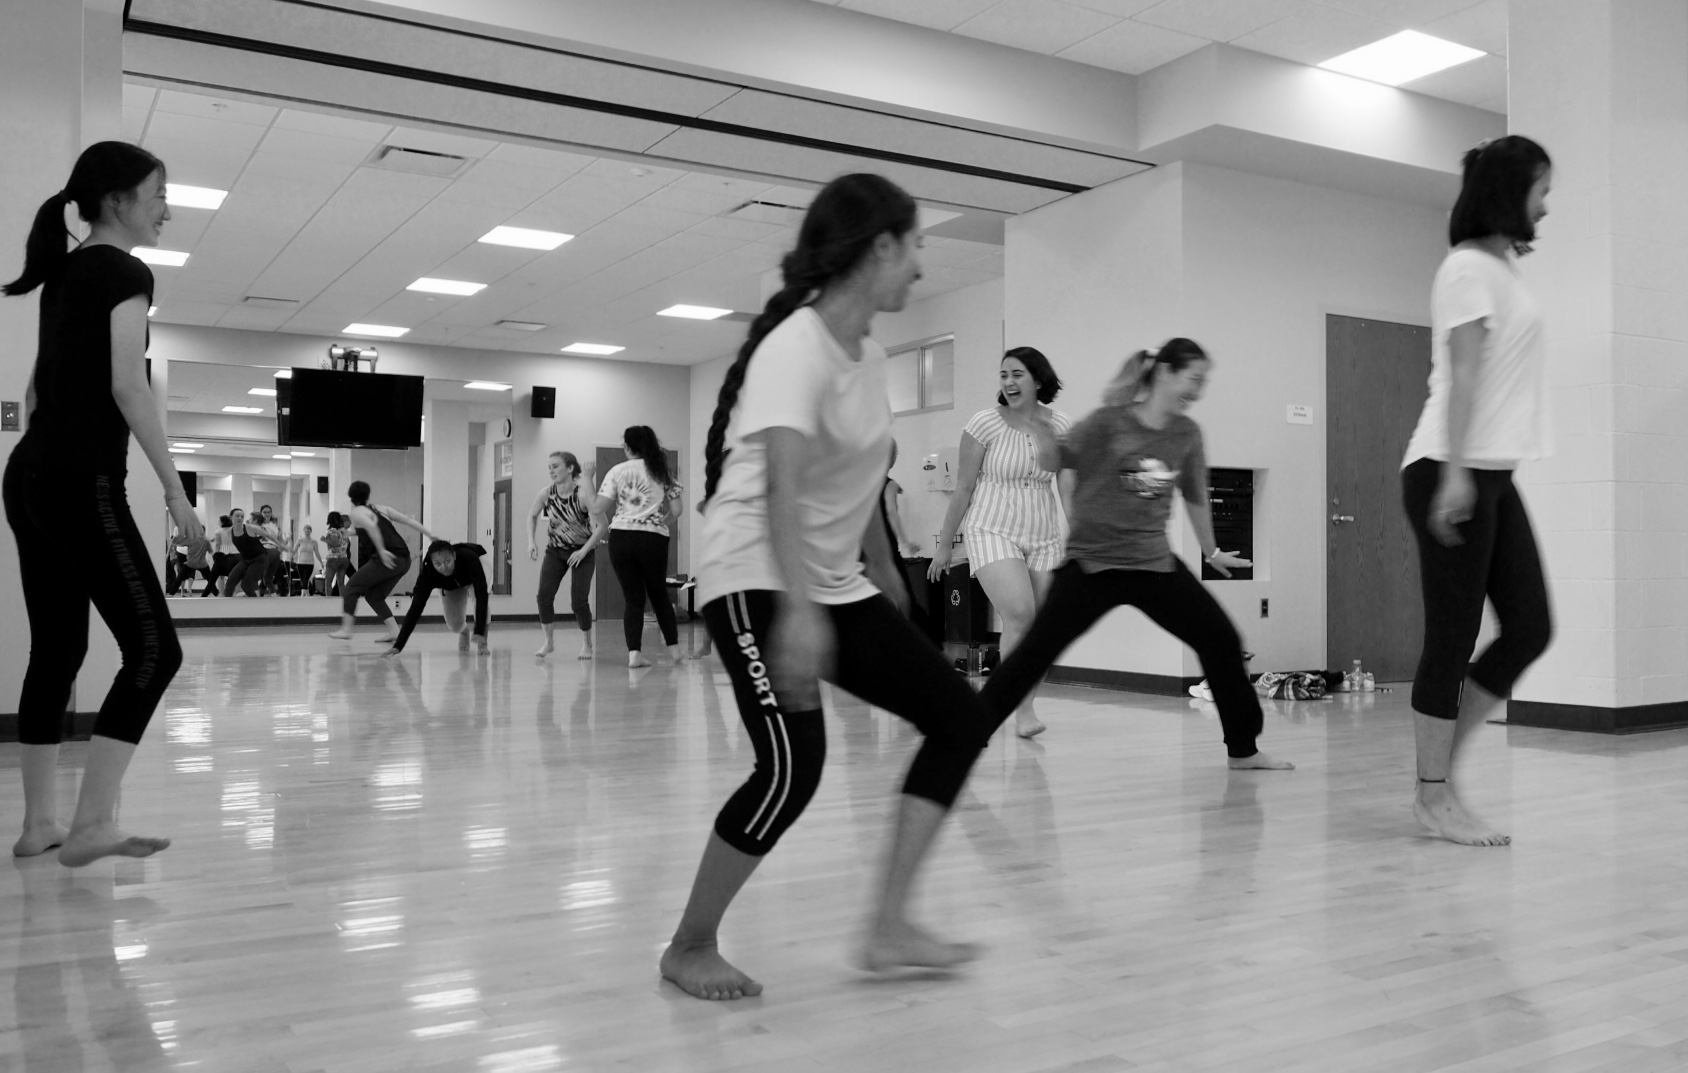 Students work on techniques in dance studio